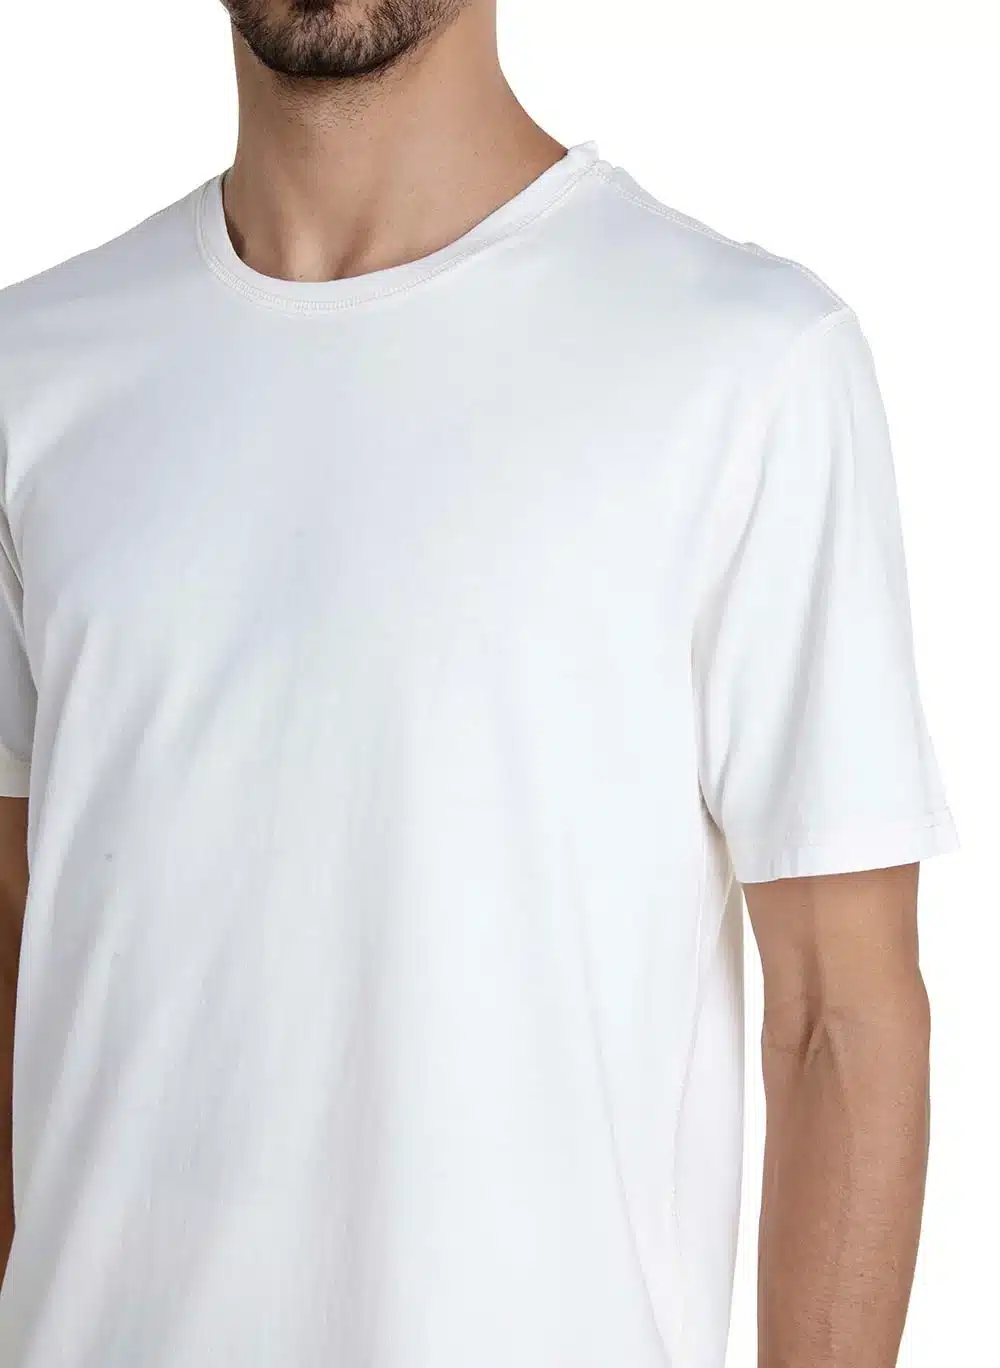 Camiseta John John Rg Flame Transfer Masculina Branco - Compre Agora